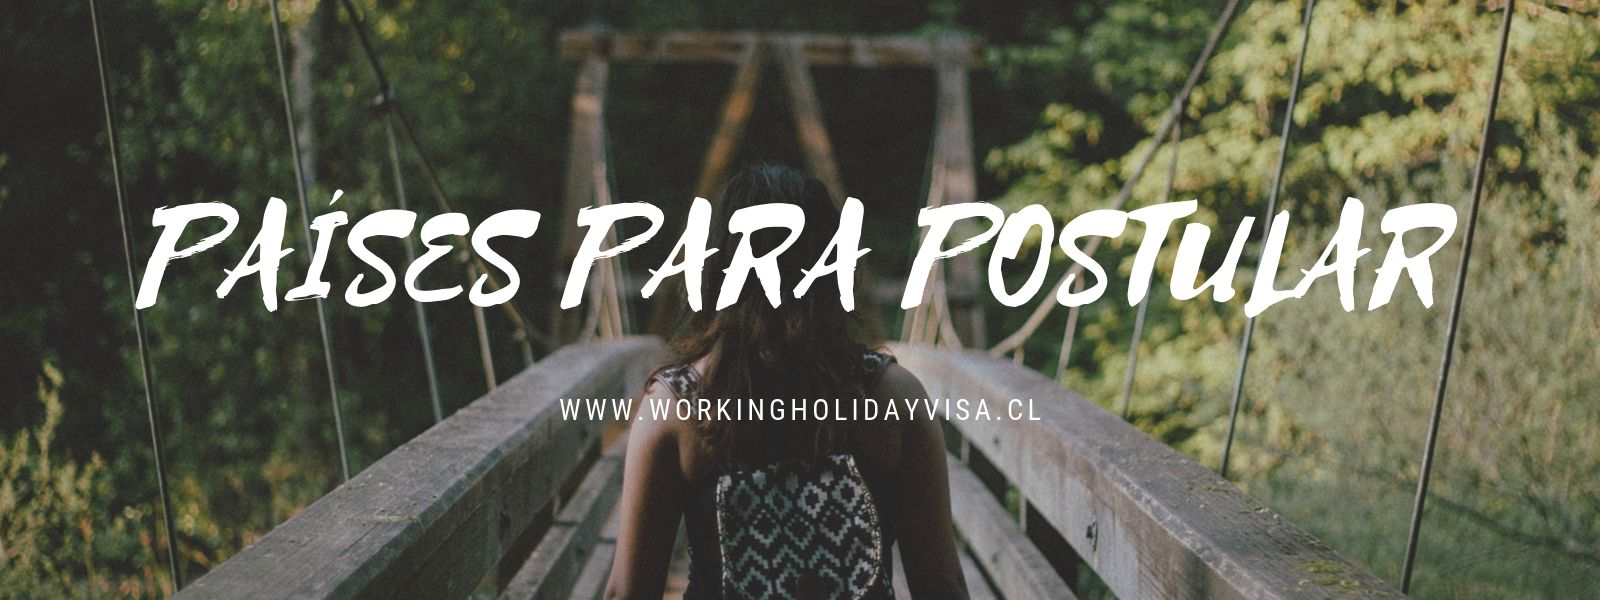 PAISES PARA POSTULAR - Working Holiday